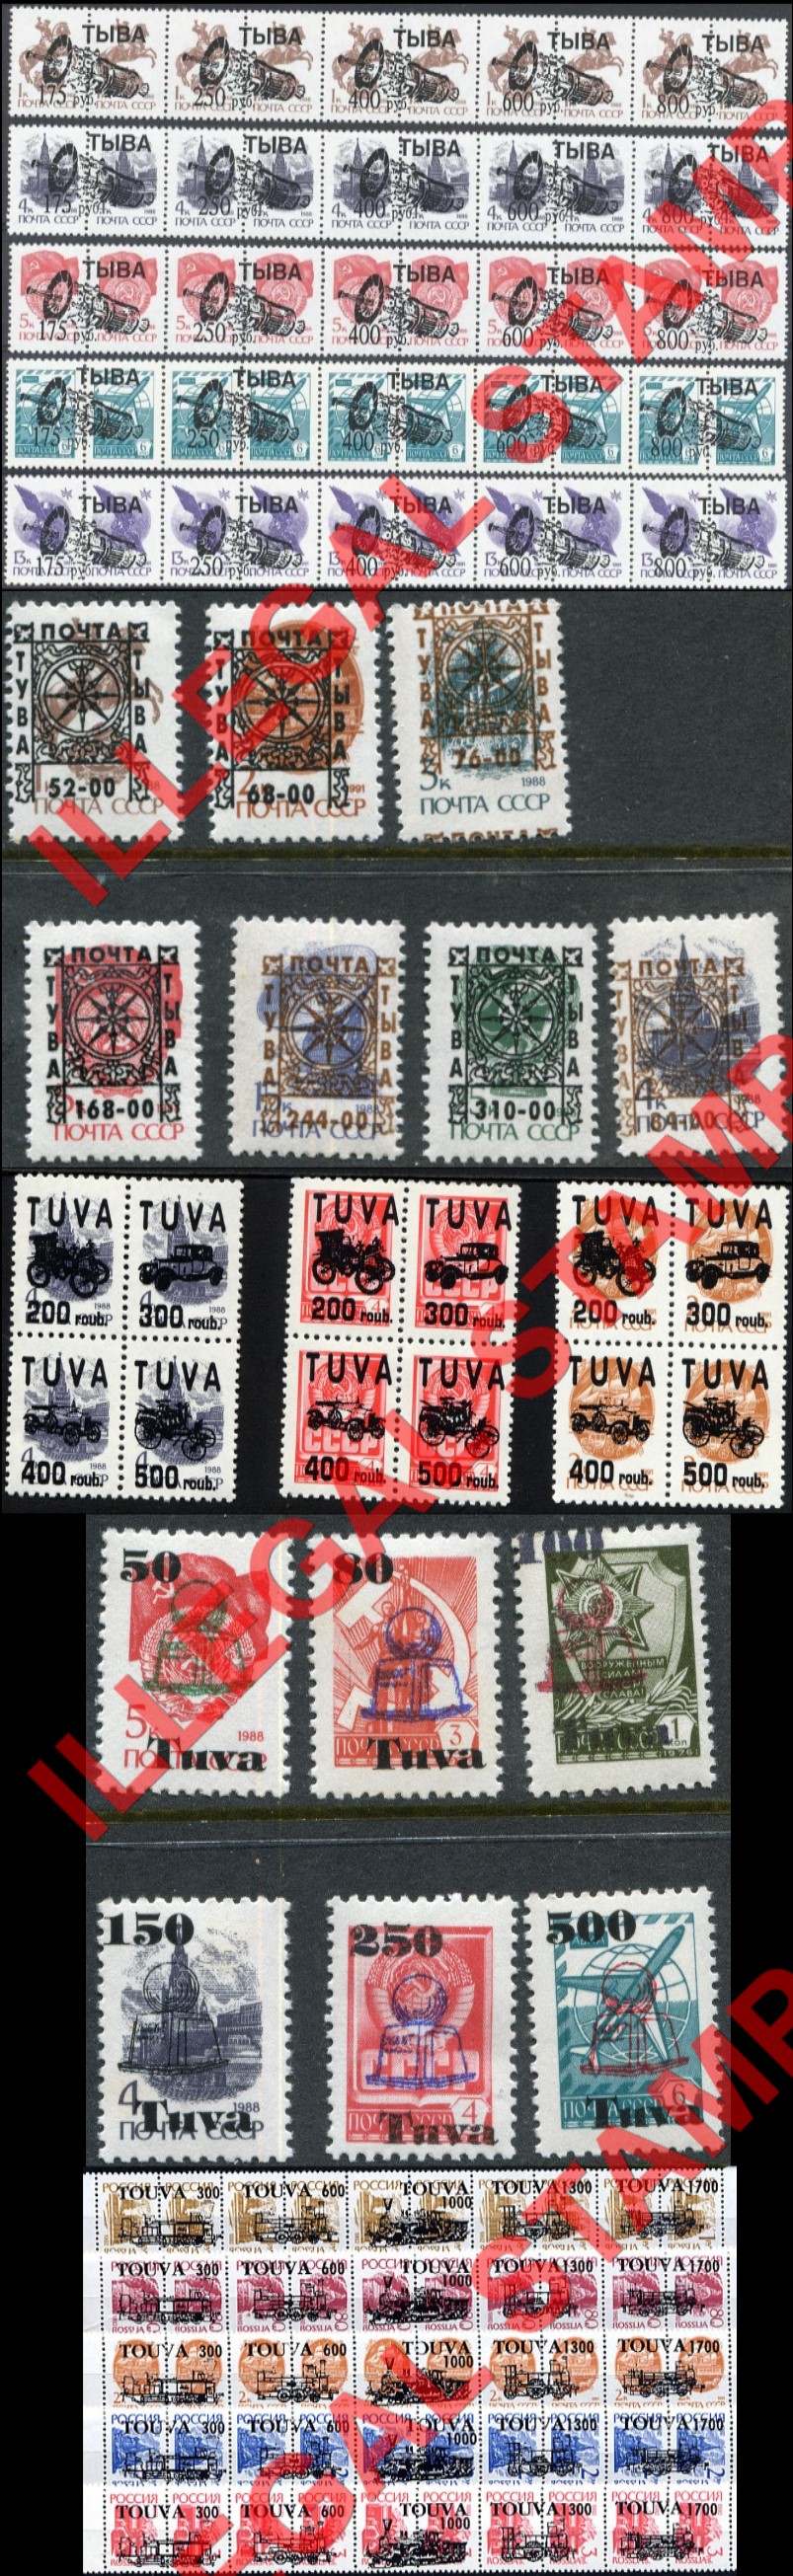 Republic of Tuva 1992-6 Counterfeit Illegal Stamps (Part 2)